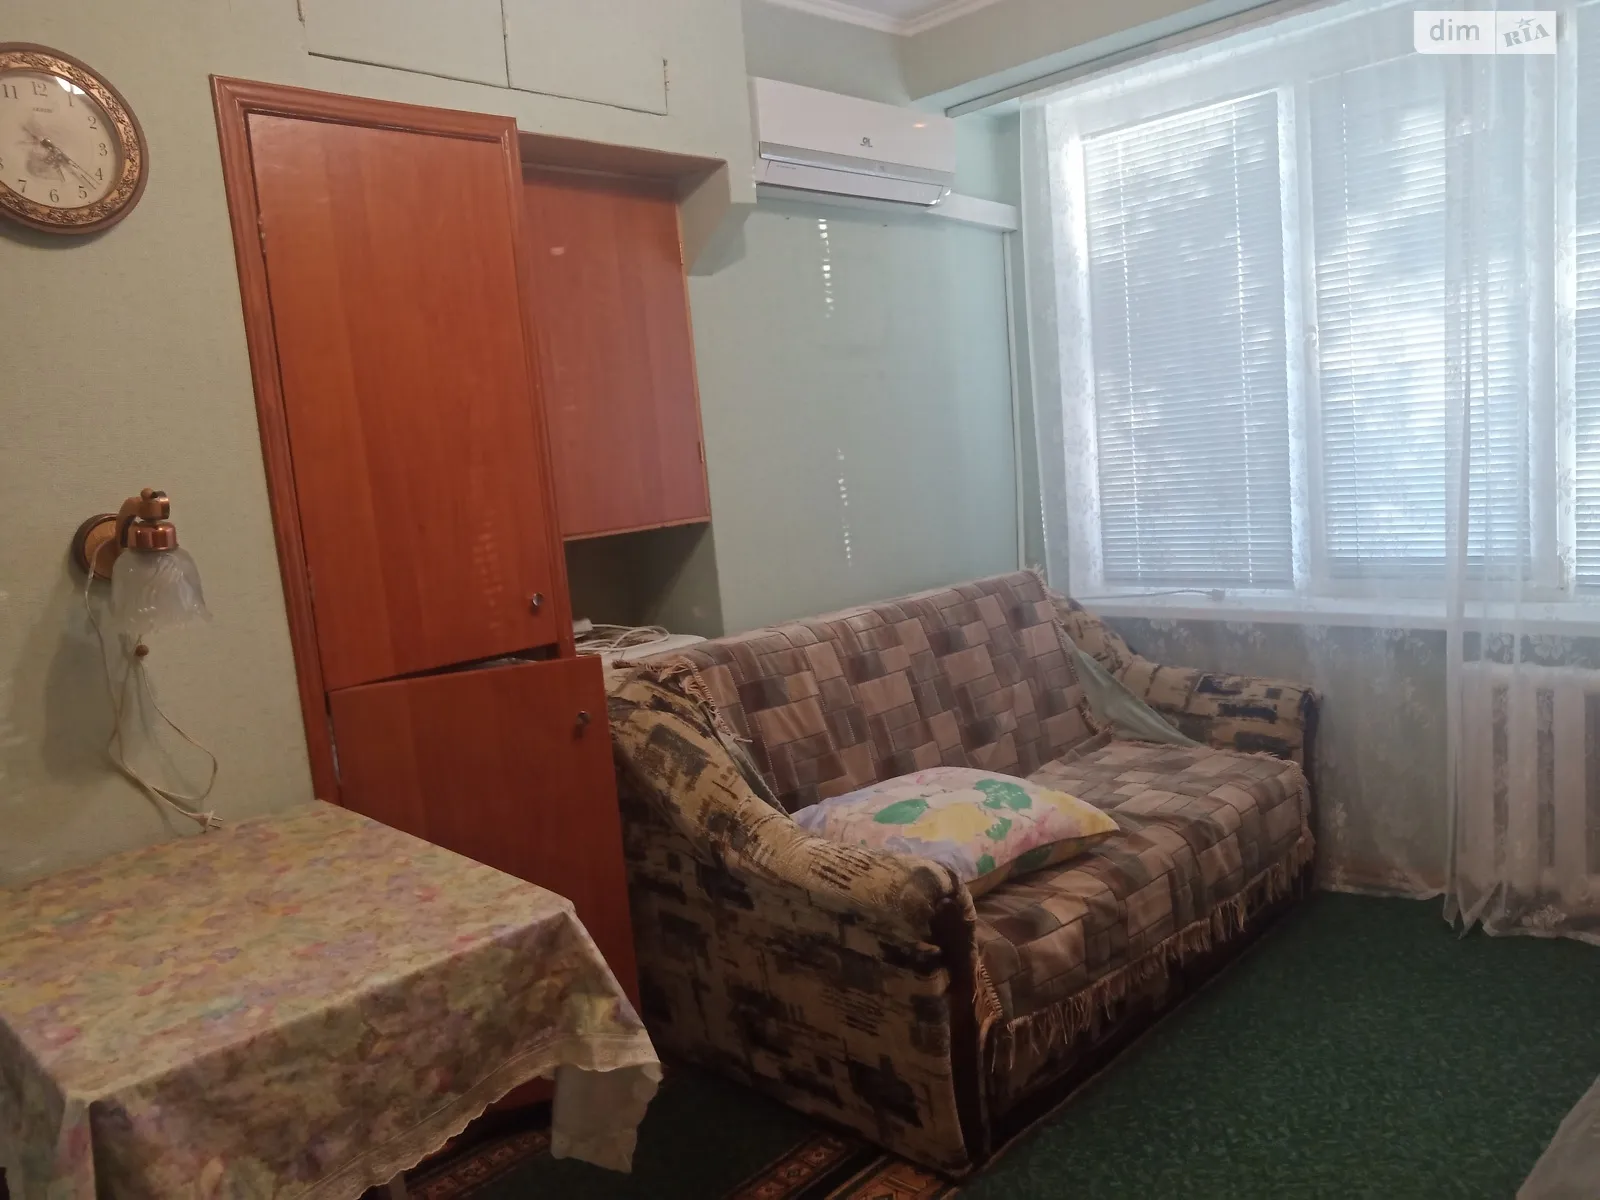 Продается комната 21 кв. м в Киеве, цена: 19000 $ - фото 1